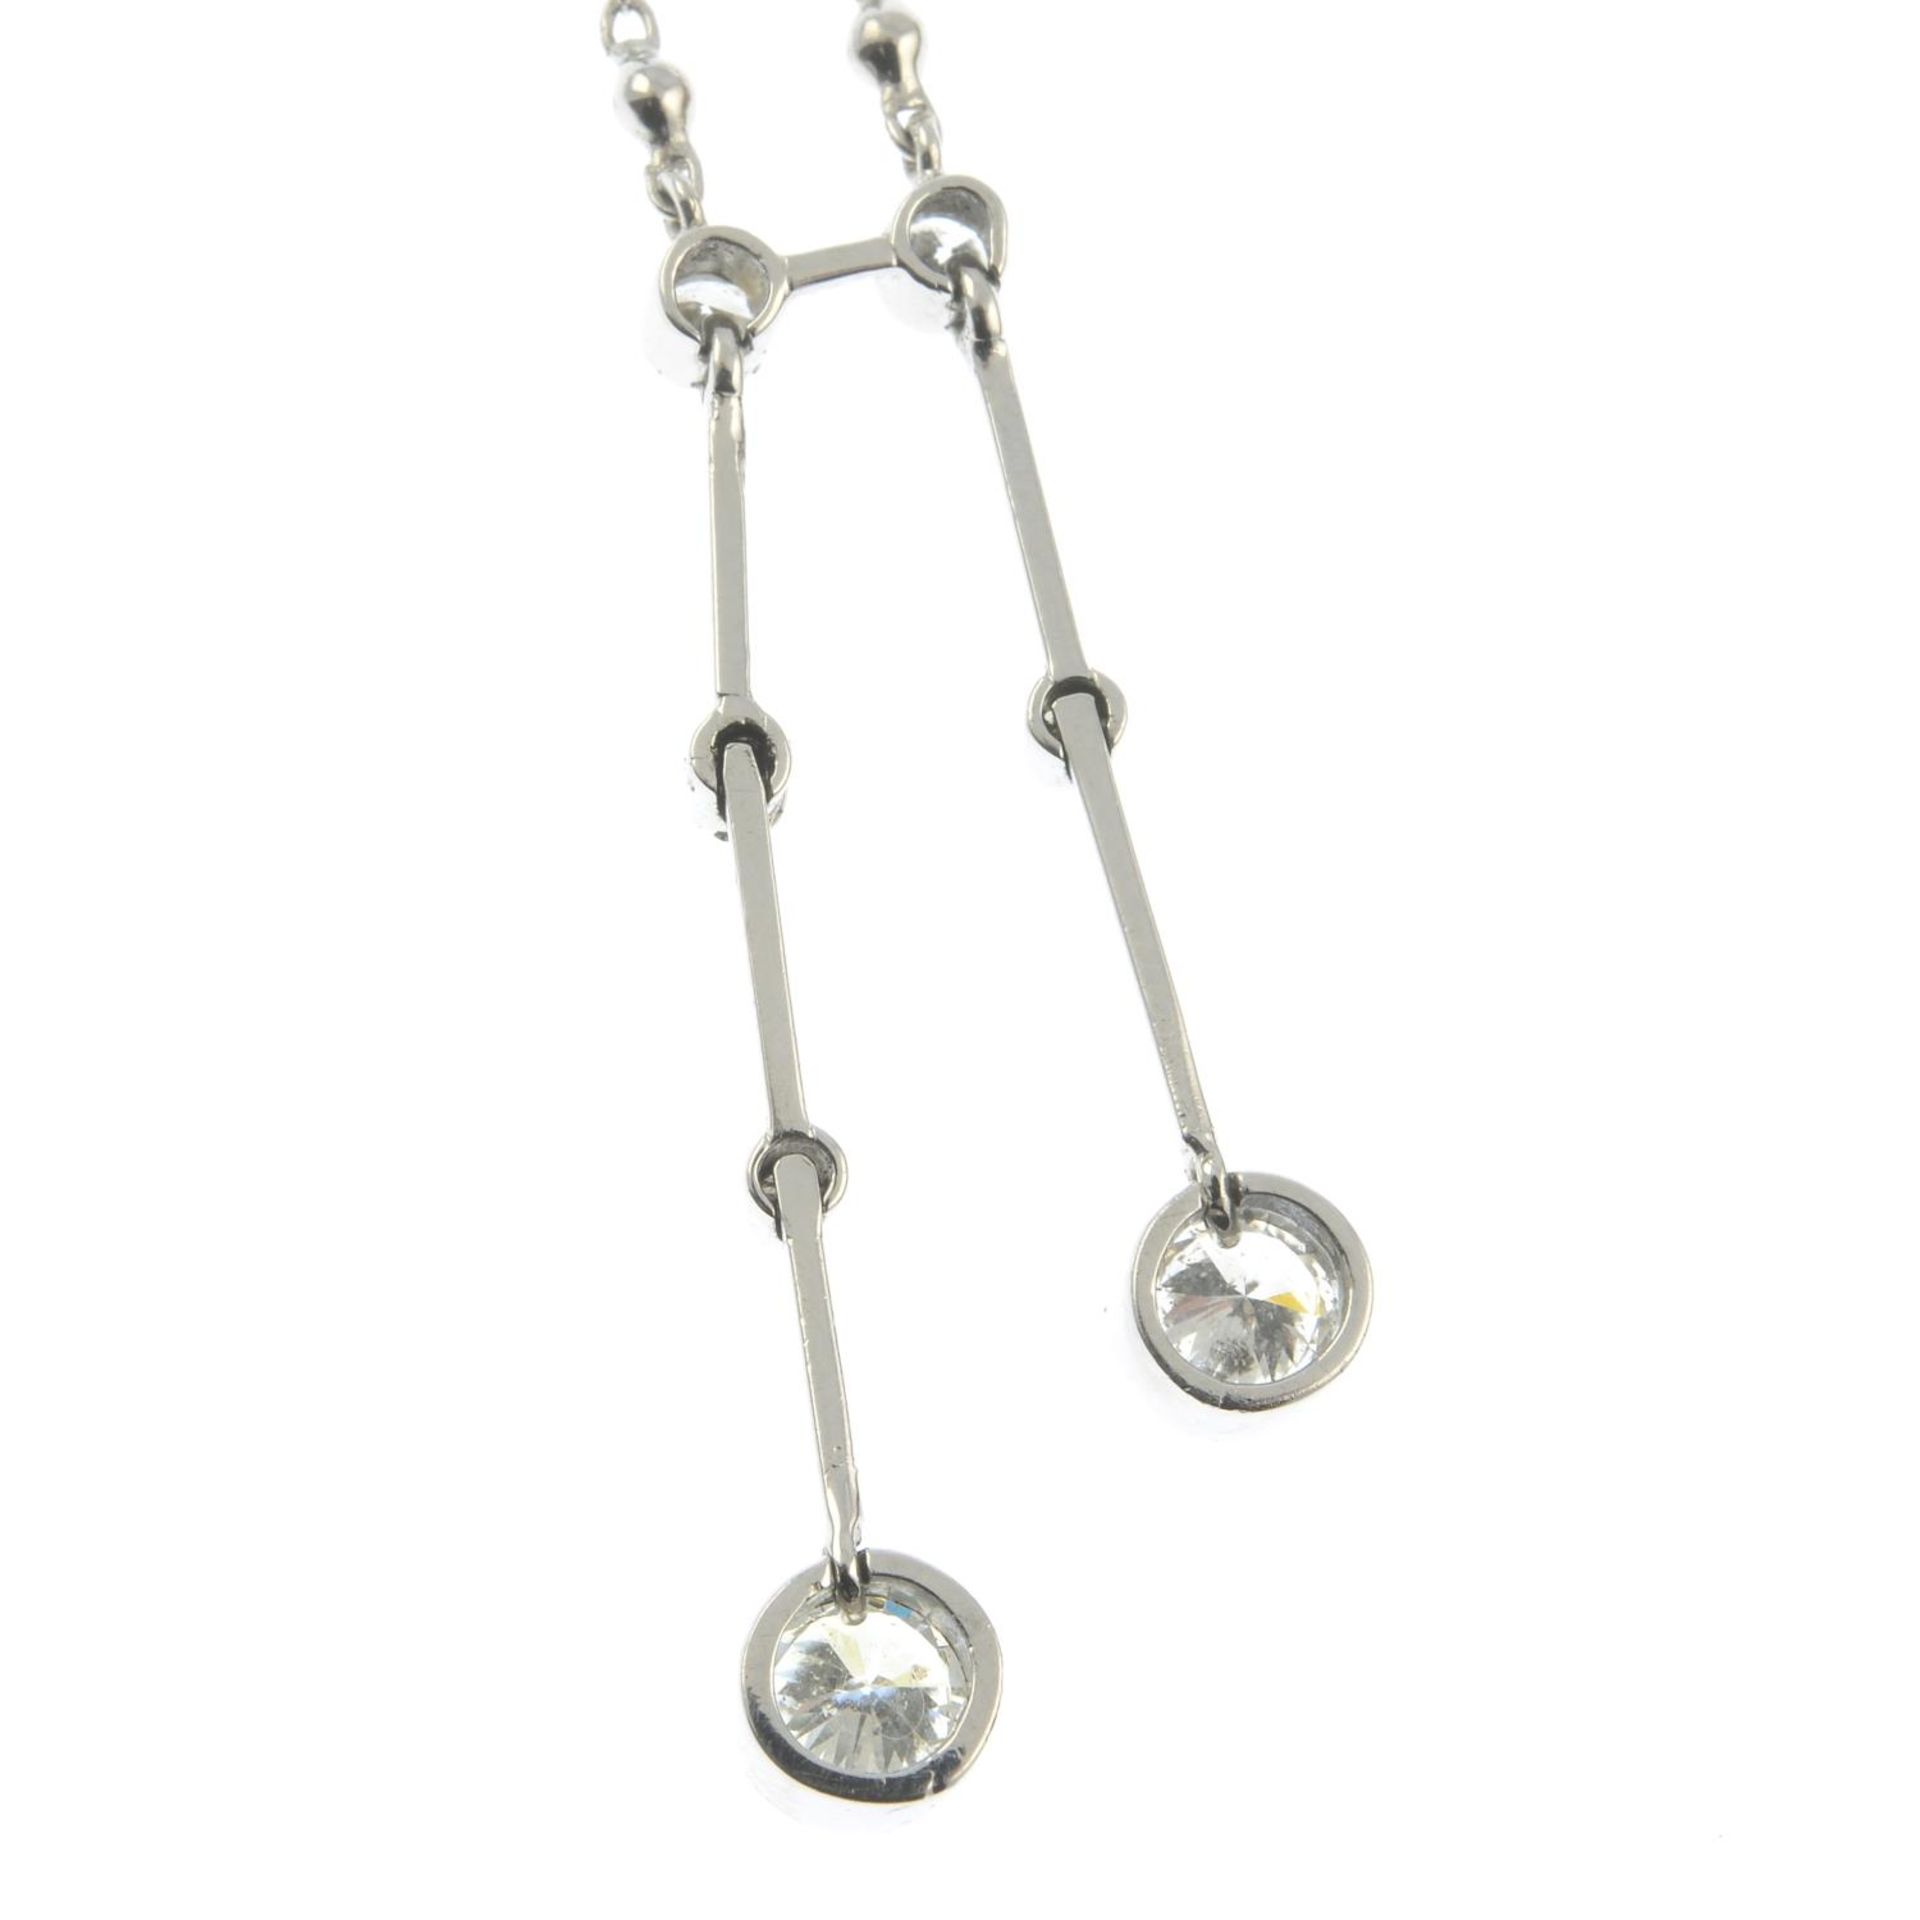 A brilliant-cut diamond negligee pendant, - Image 2 of 2